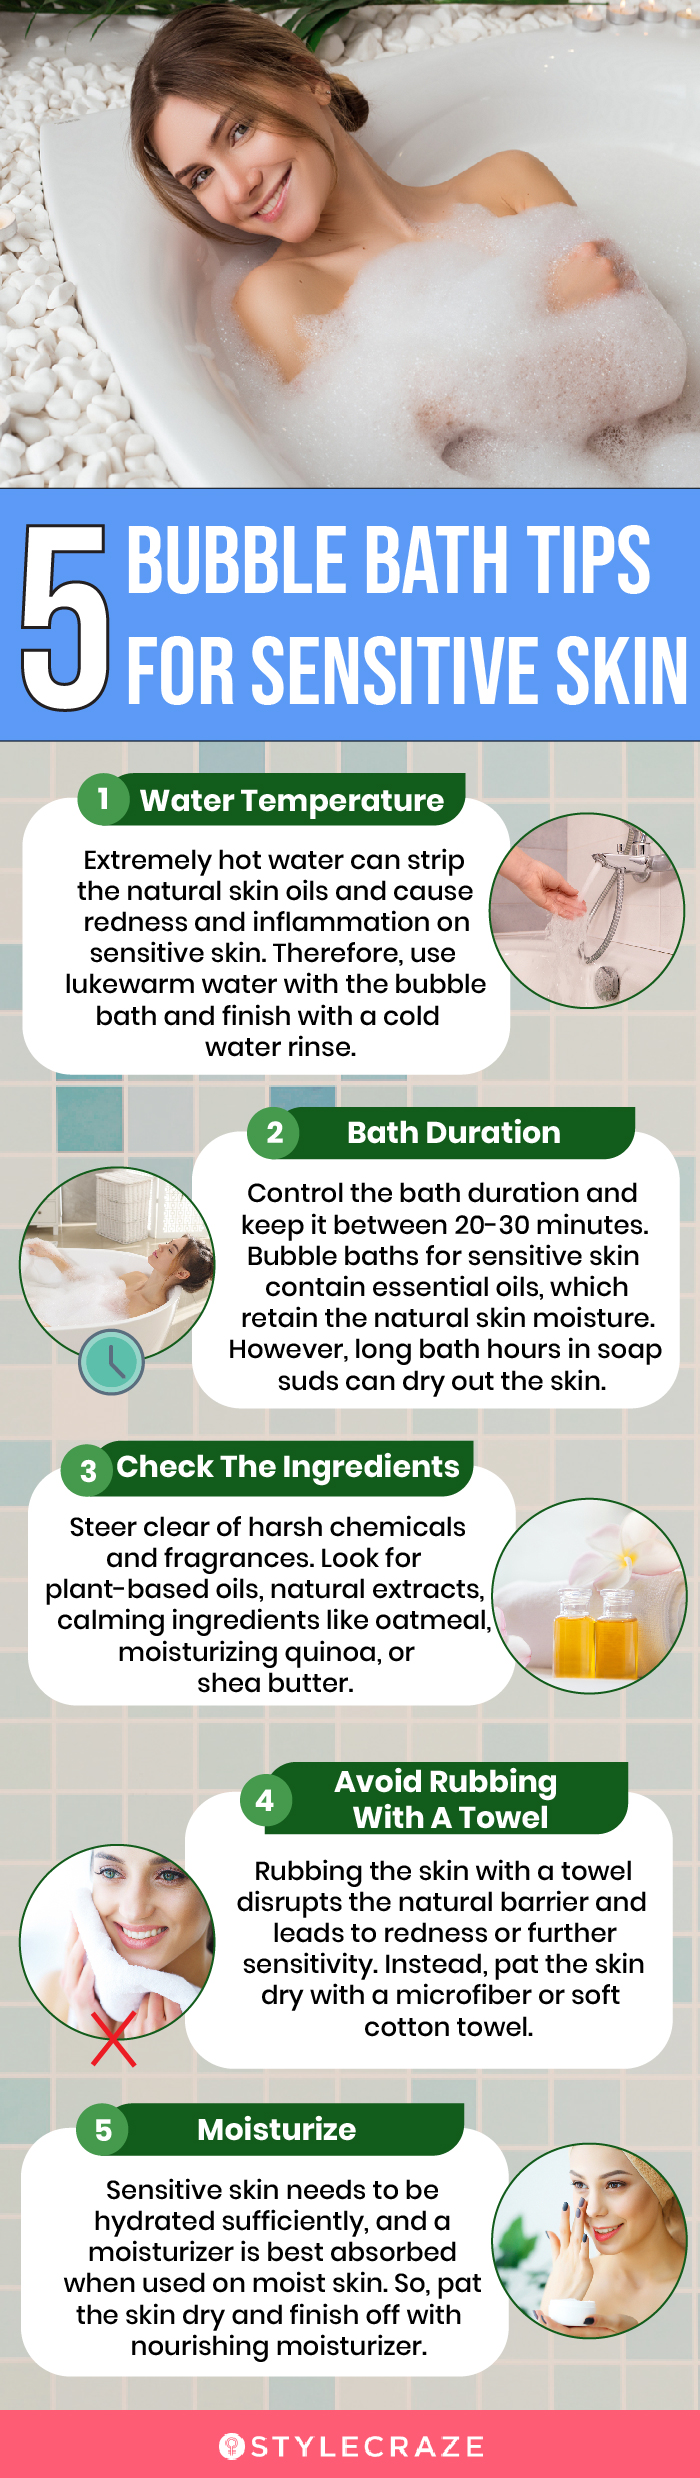 5 Bubble Bath Tips For Sensitive Skin(infographic)